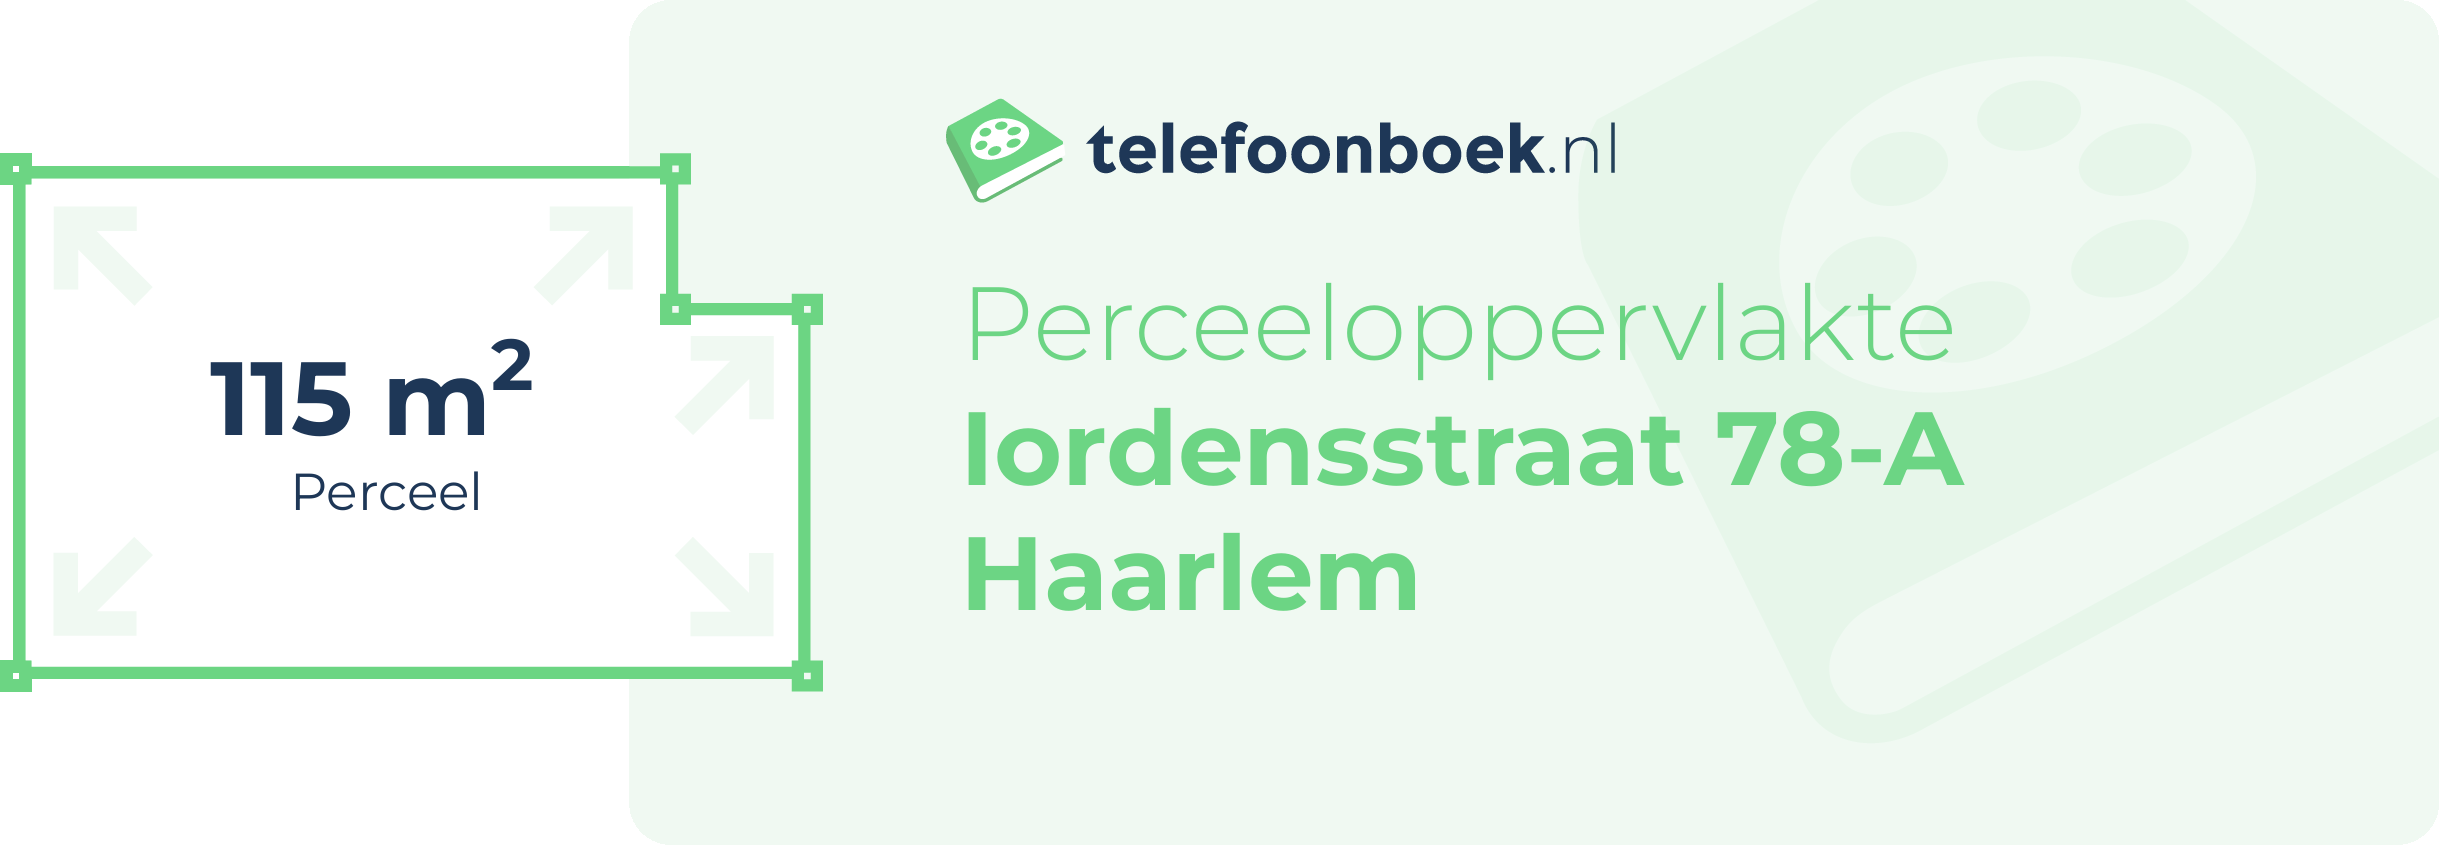 Perceeloppervlakte Iordensstraat 78-A Haarlem